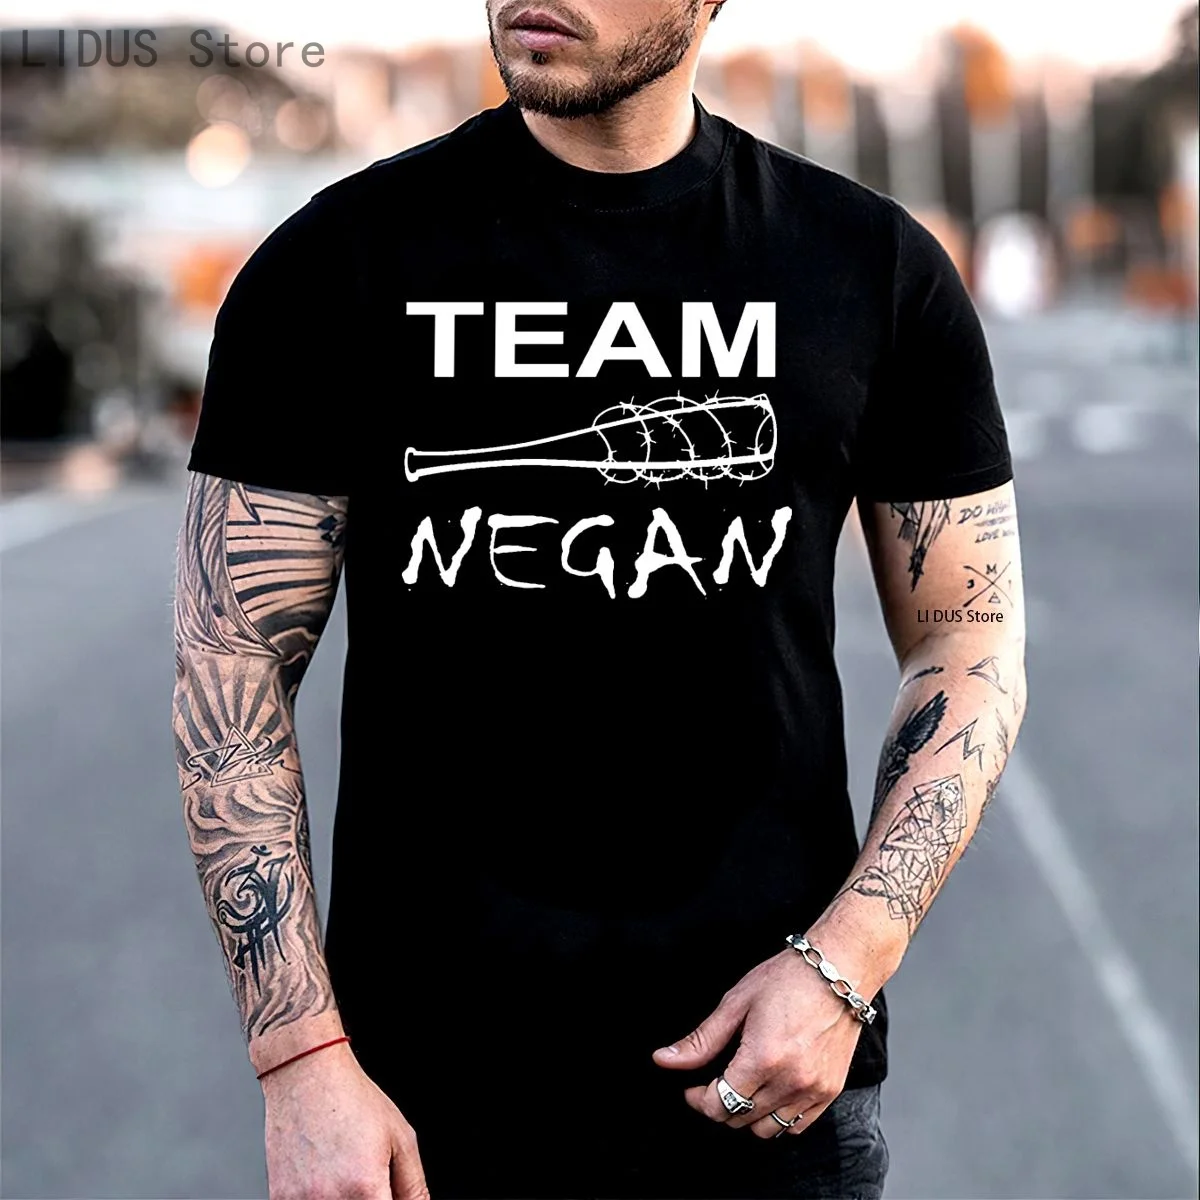 

Team Negan T-Shirt - ZOMBIE Walking Walker Halloween Dead Horror Scary Tee Fashion Design Free Shipping Trend T Shirt